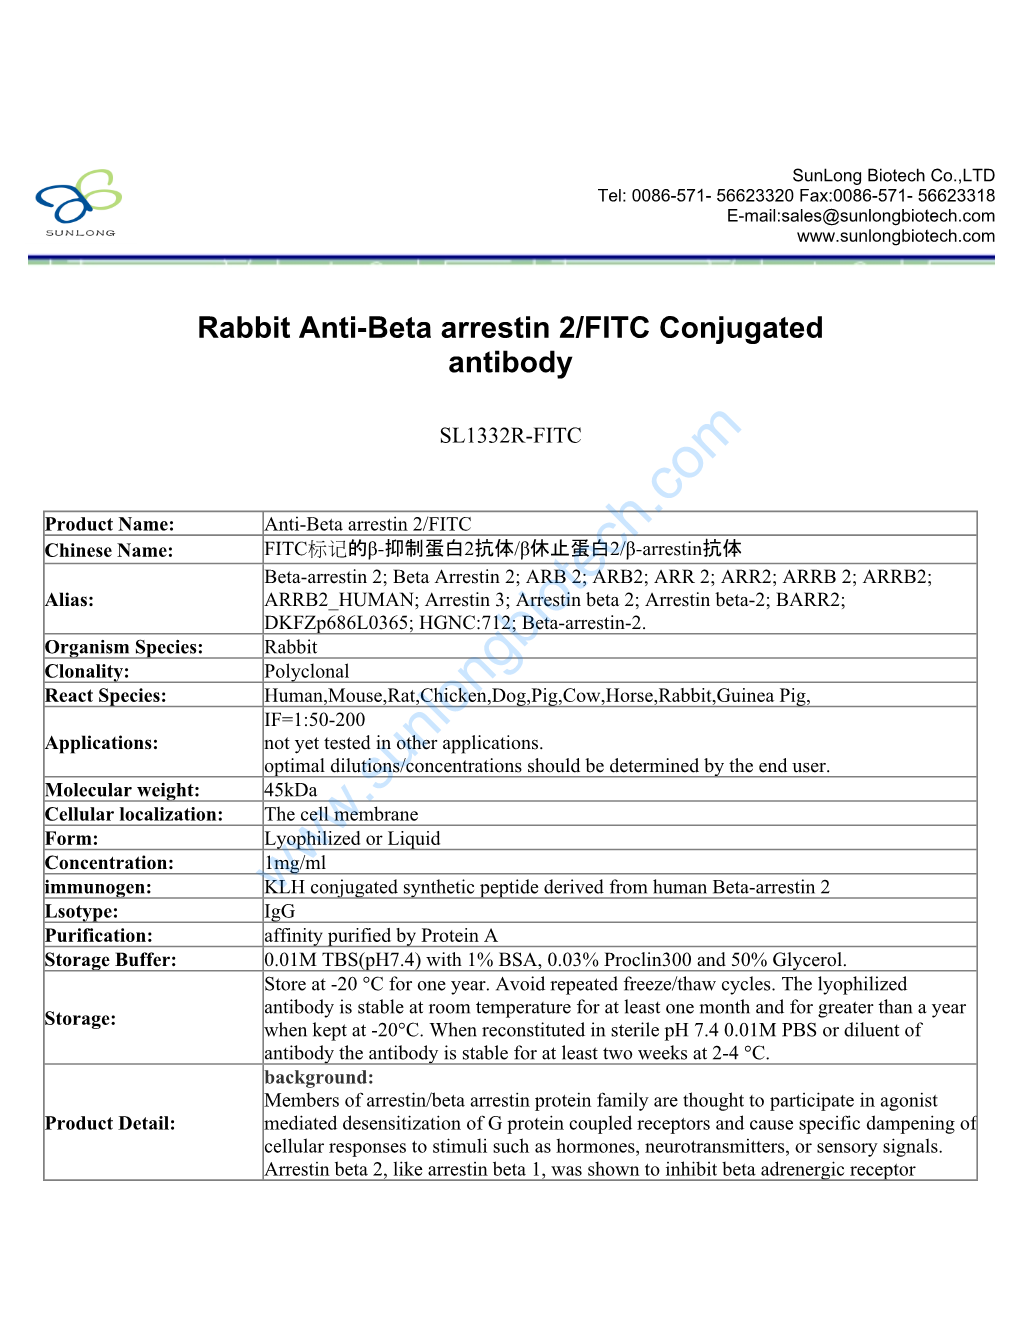 Rabbit Anti-Beta Arrestin 2/FITC Conjugated Antibody